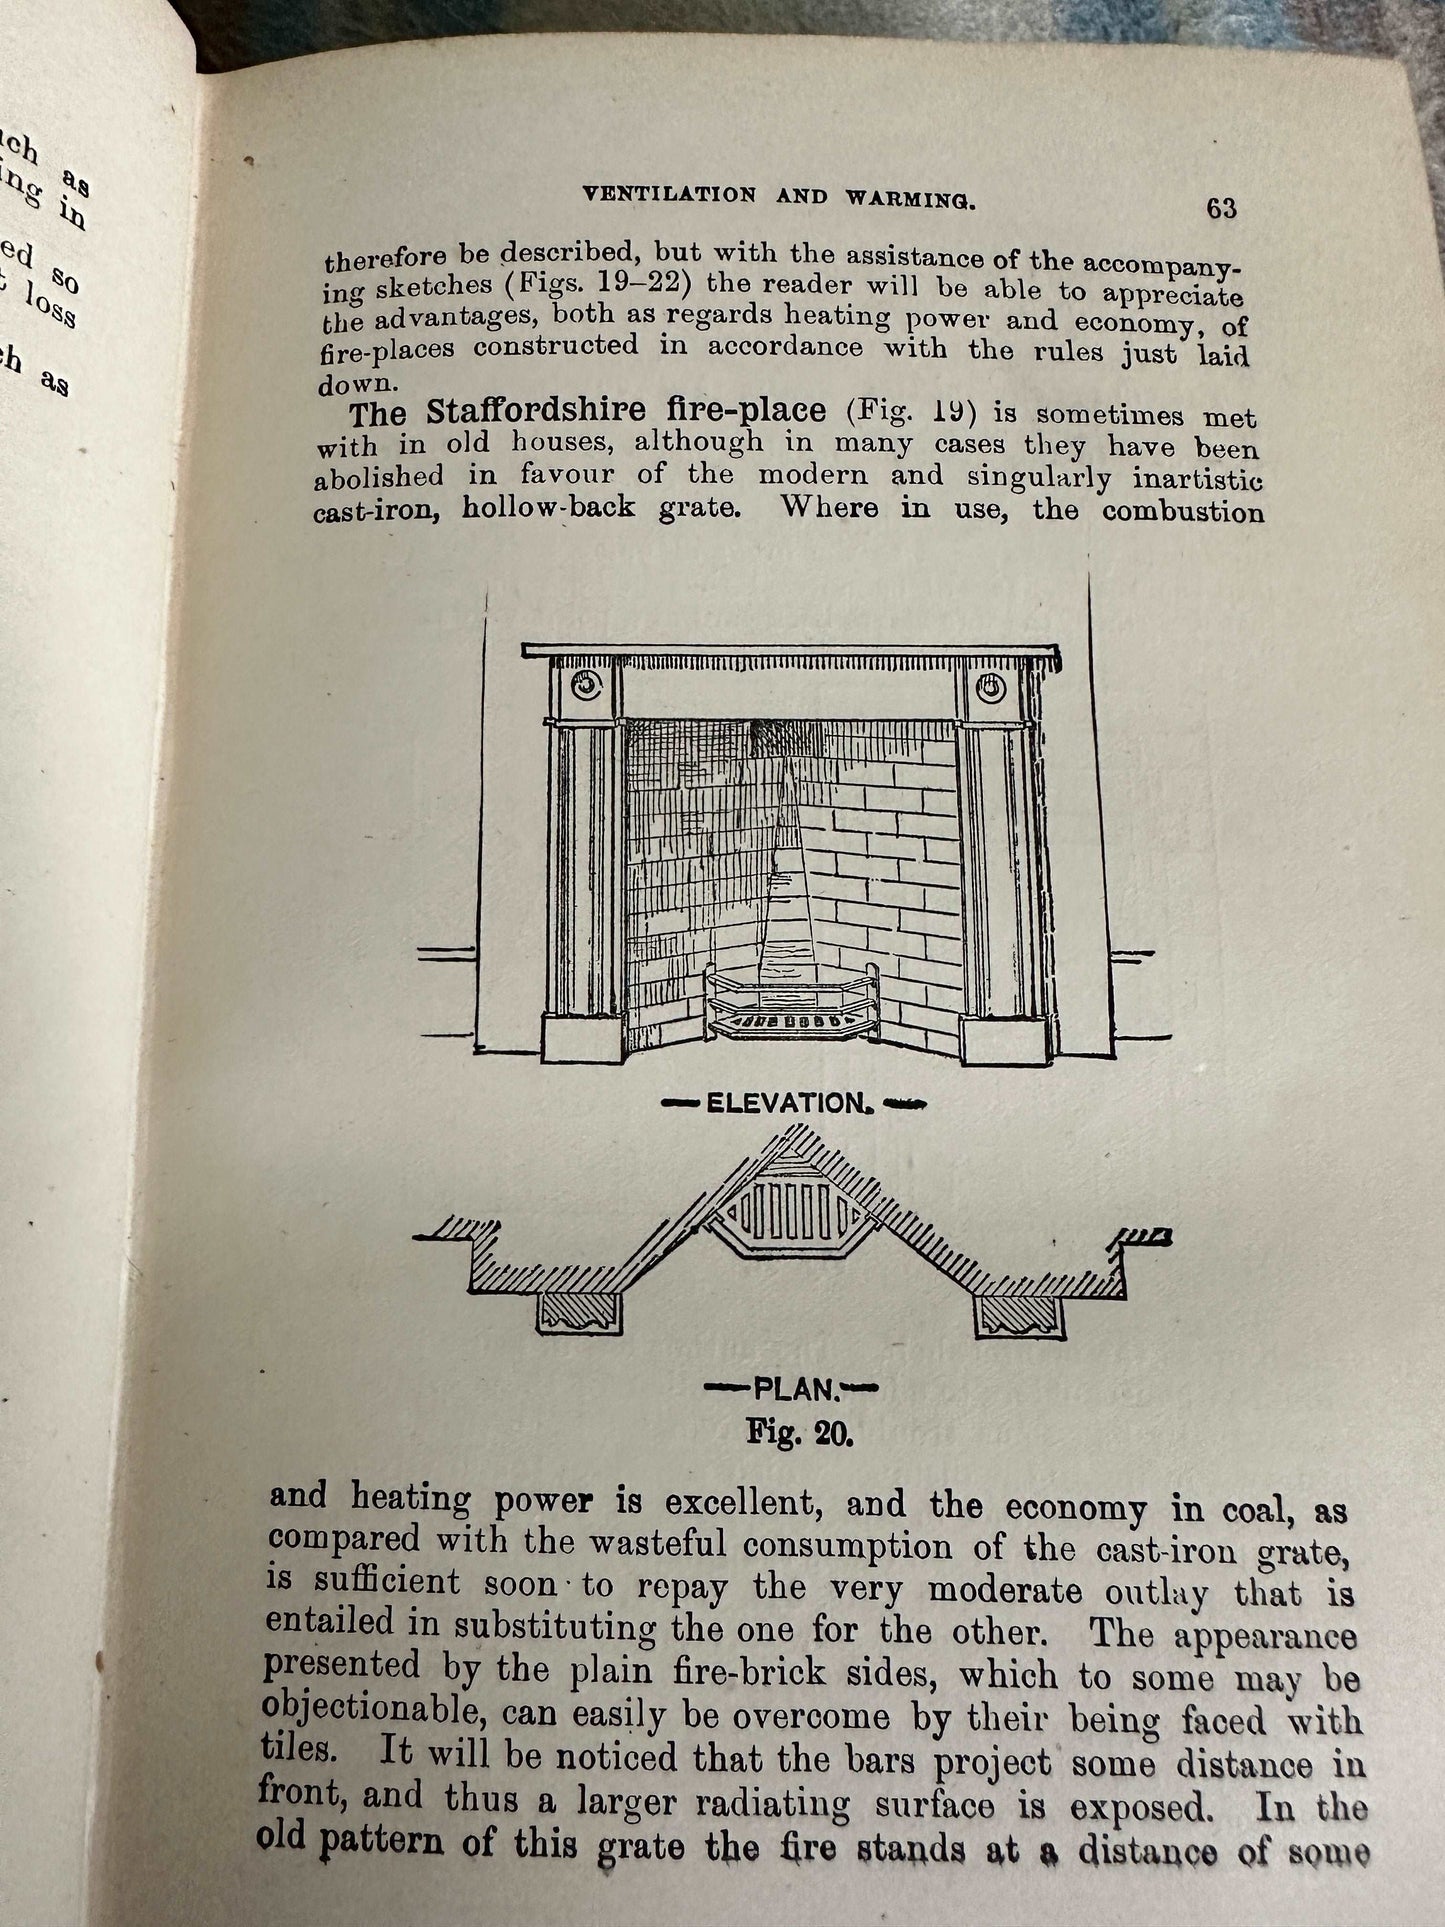 1902 Practical Sanitation - George Reid(Charles Griffin & Co. Ltd)